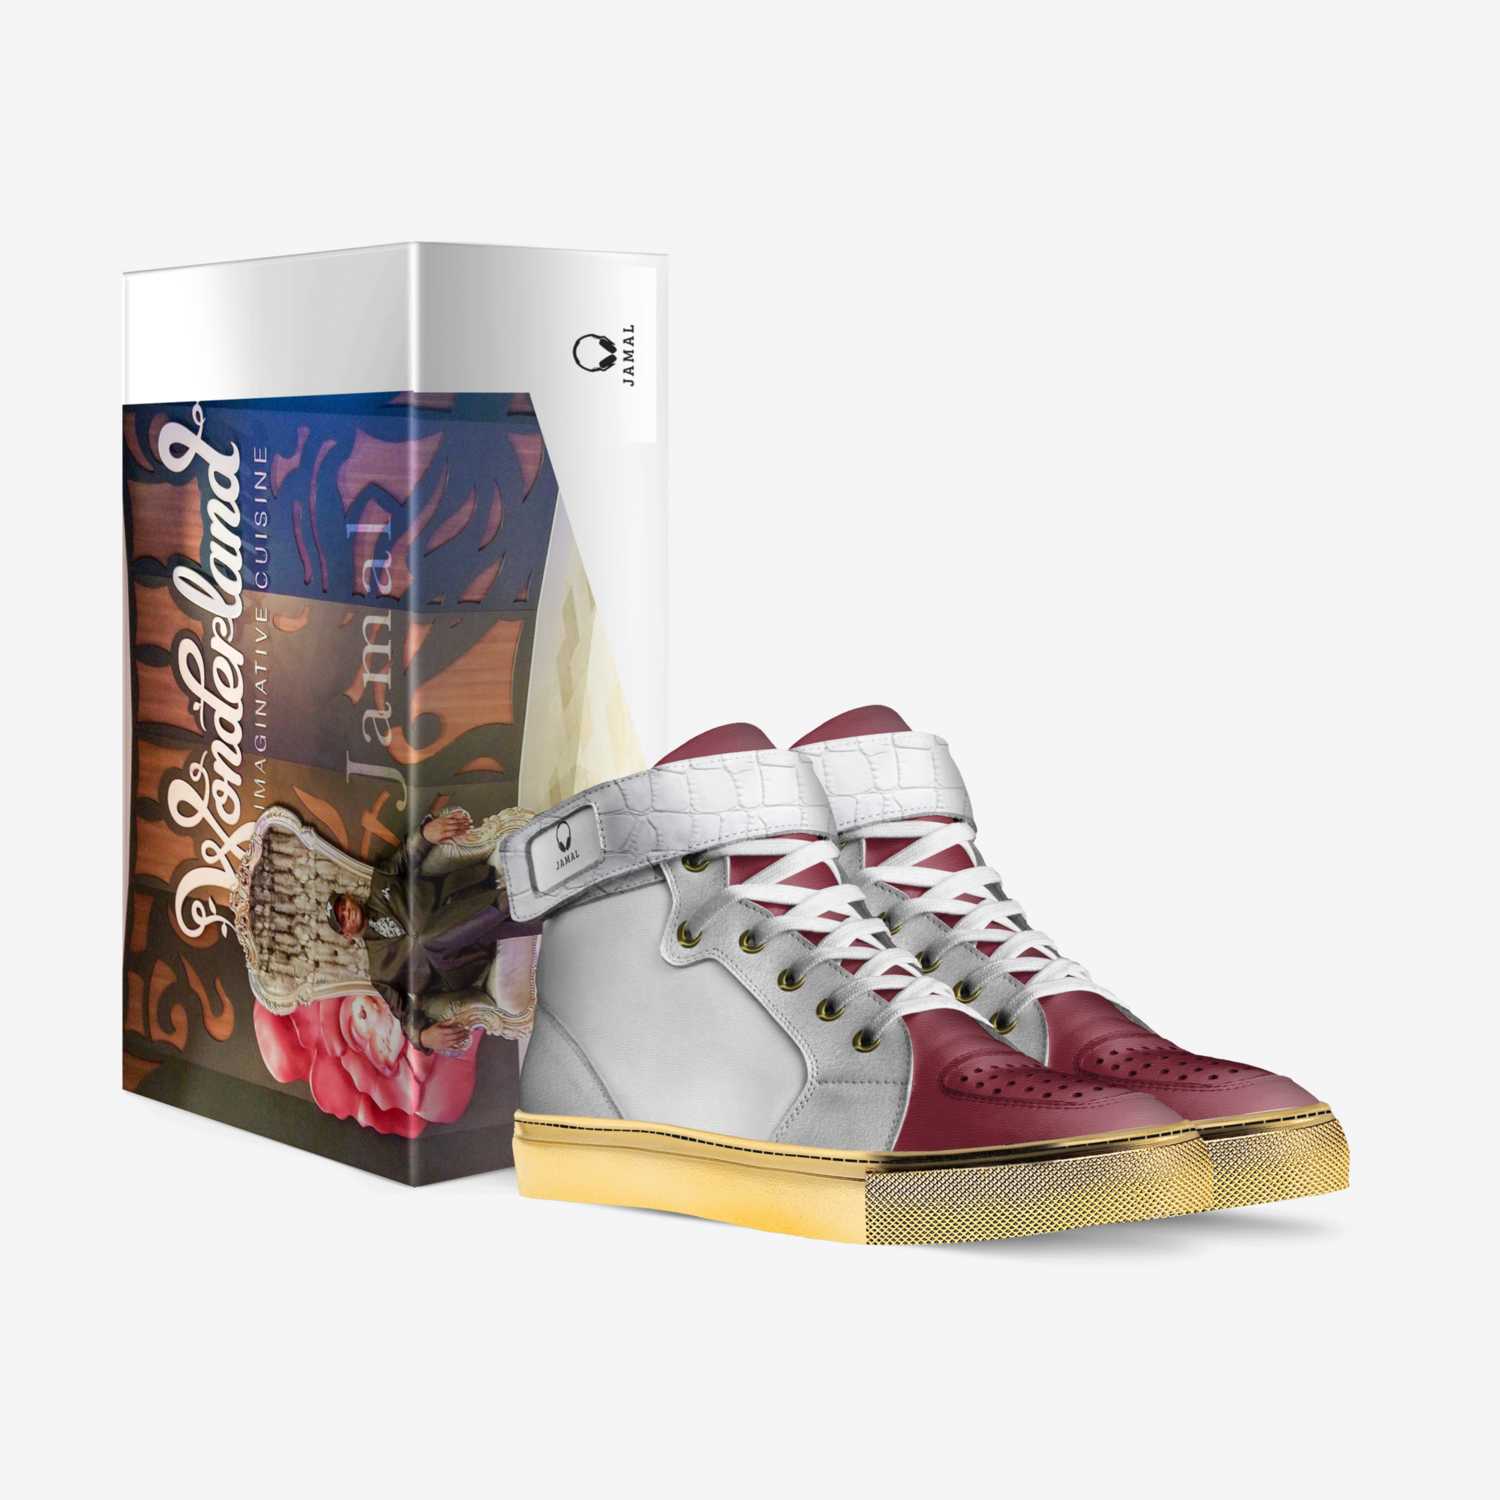 Jamal 1 custom made in Italy shoes by Nio Jackson | Box view